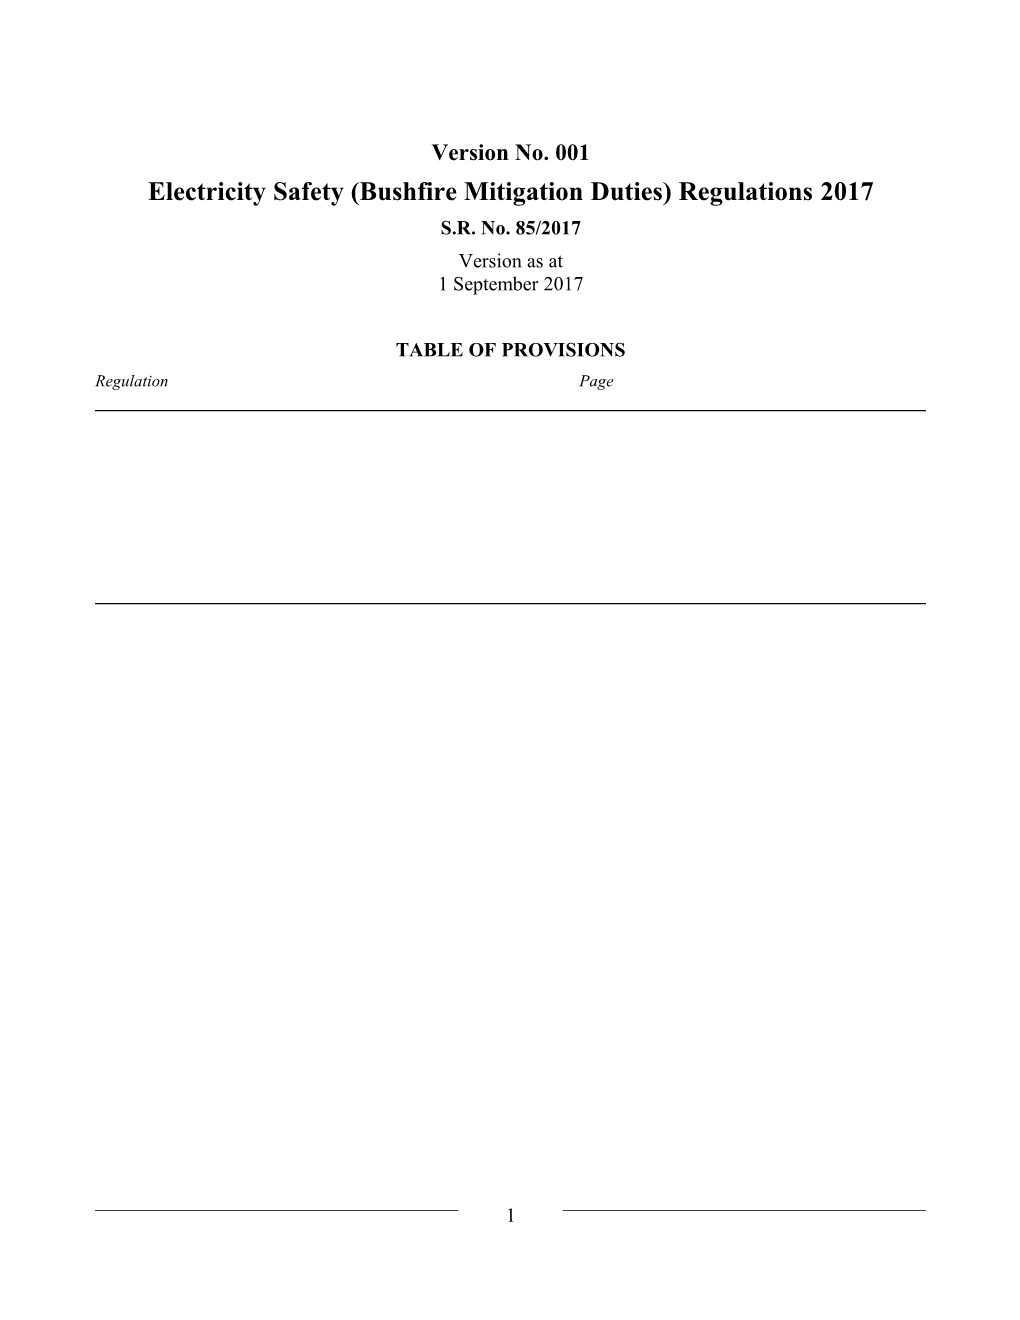 Electricity Safety (Bushfire Mitigation Duties) Regulations 2017